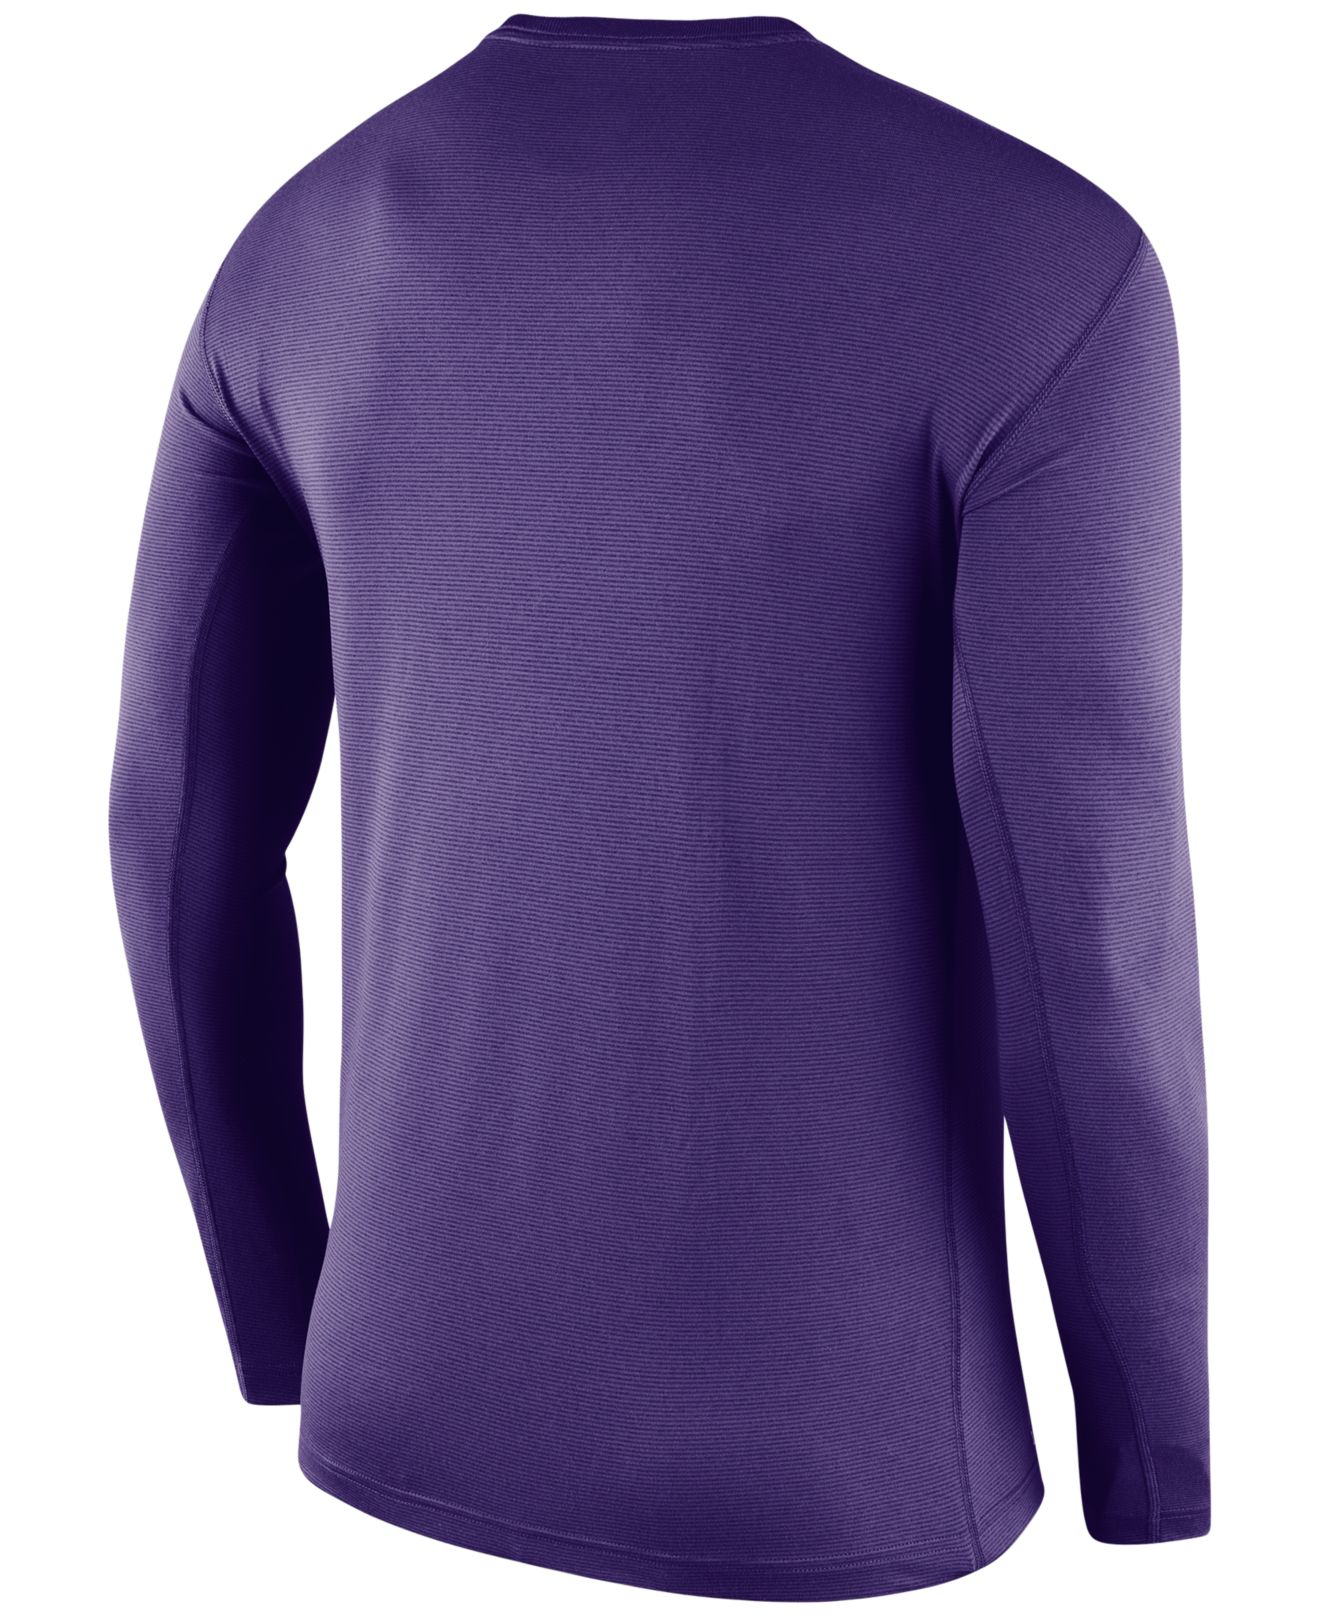 purple nike dri fit long sleeve shirt